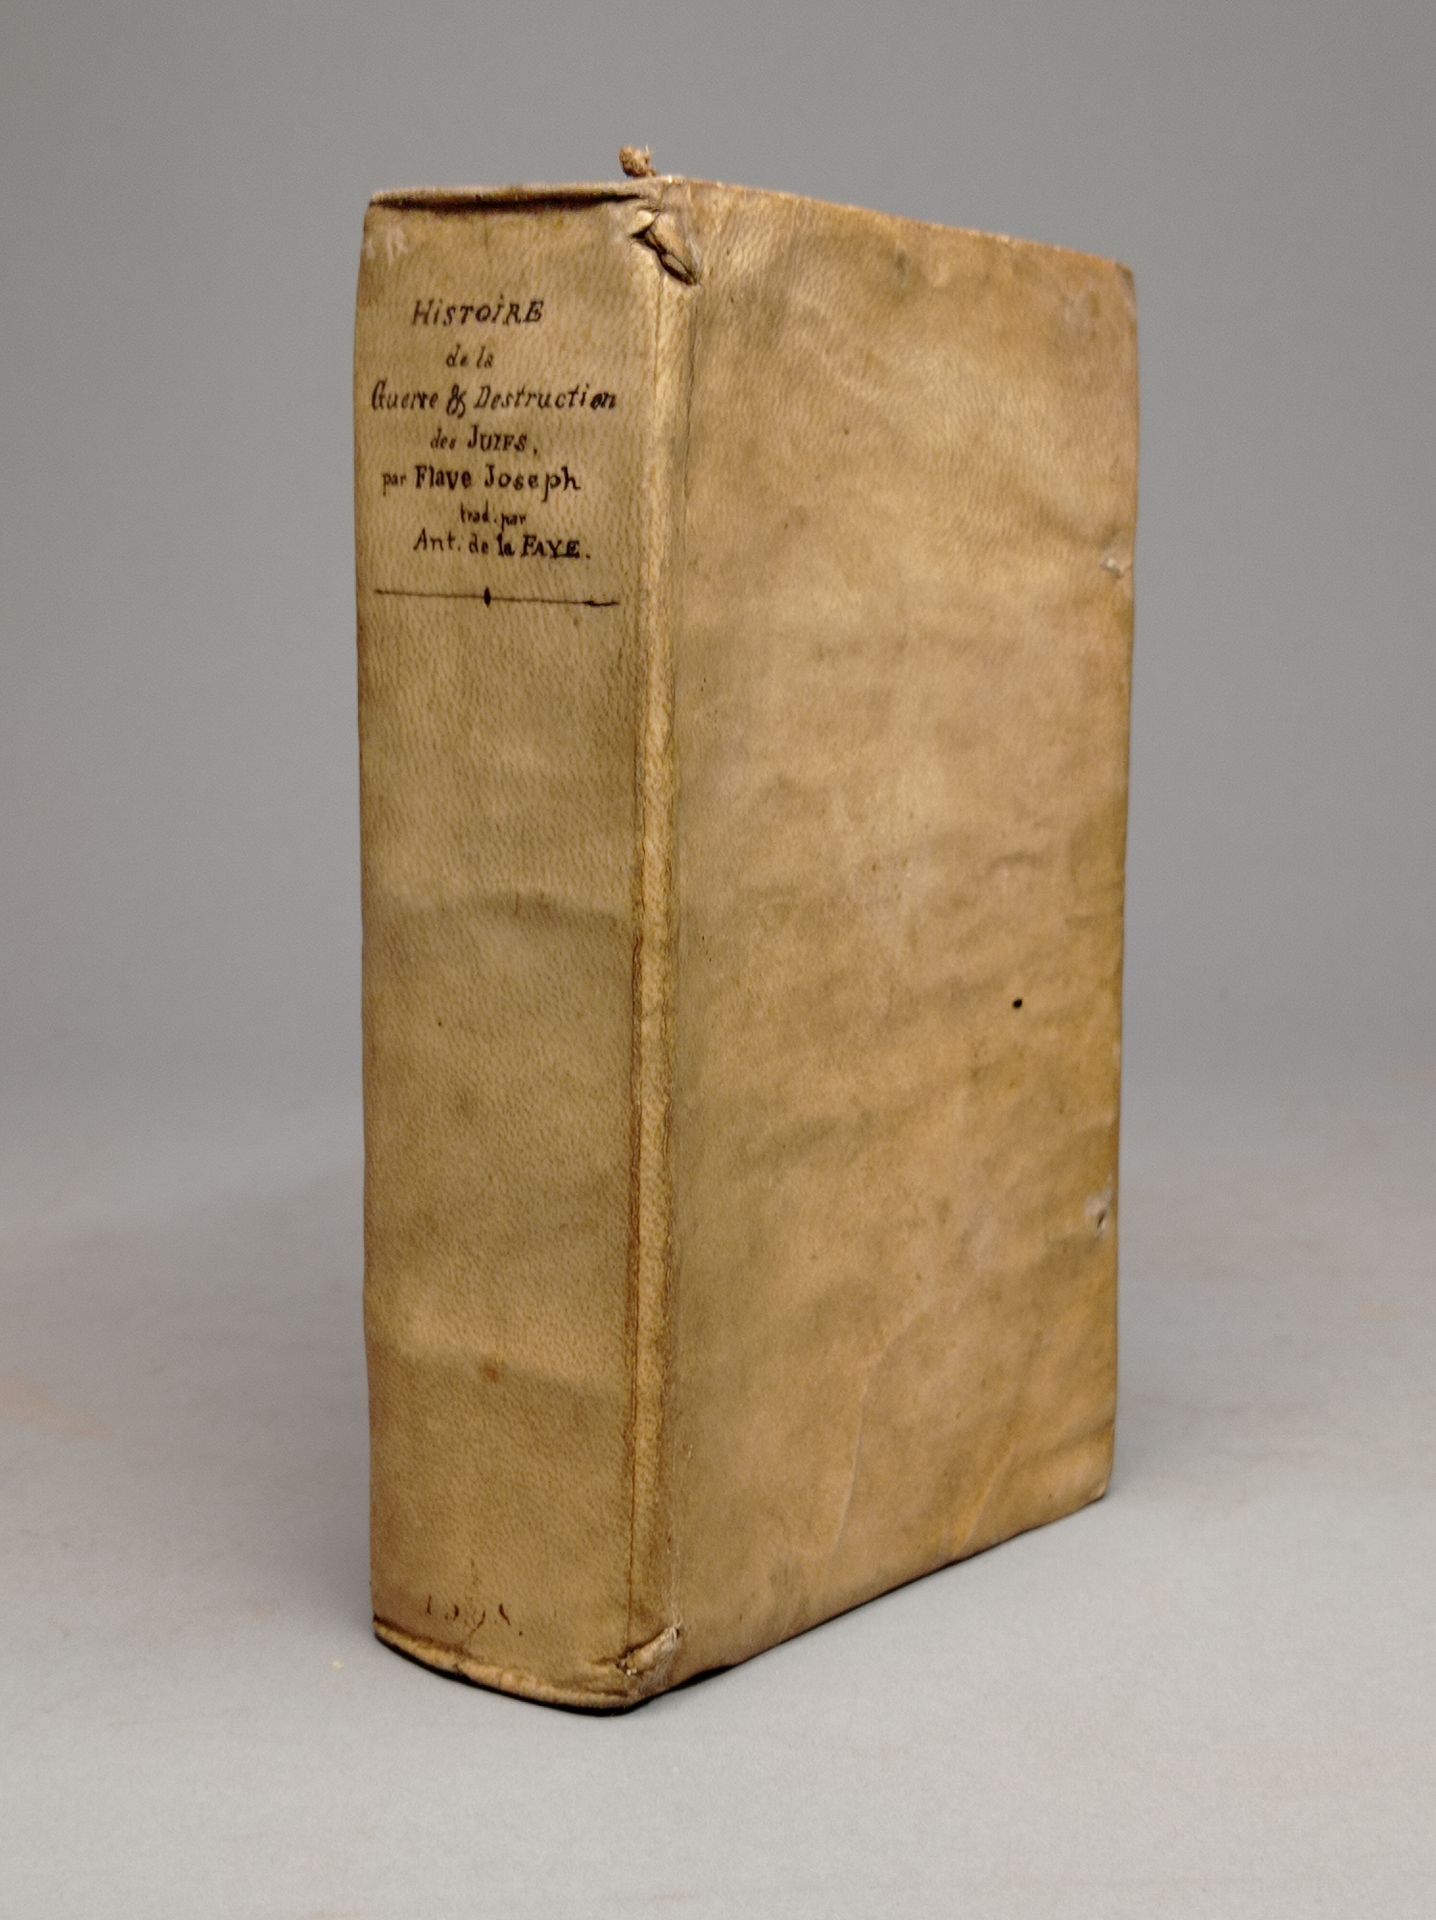 Null flavius joseph.犹太人的战争和毁灭的历史：共七册。S.L.[日内瓦]，Jean le Preux，1598年。两部分合为一卷，8开本，带&hellip;